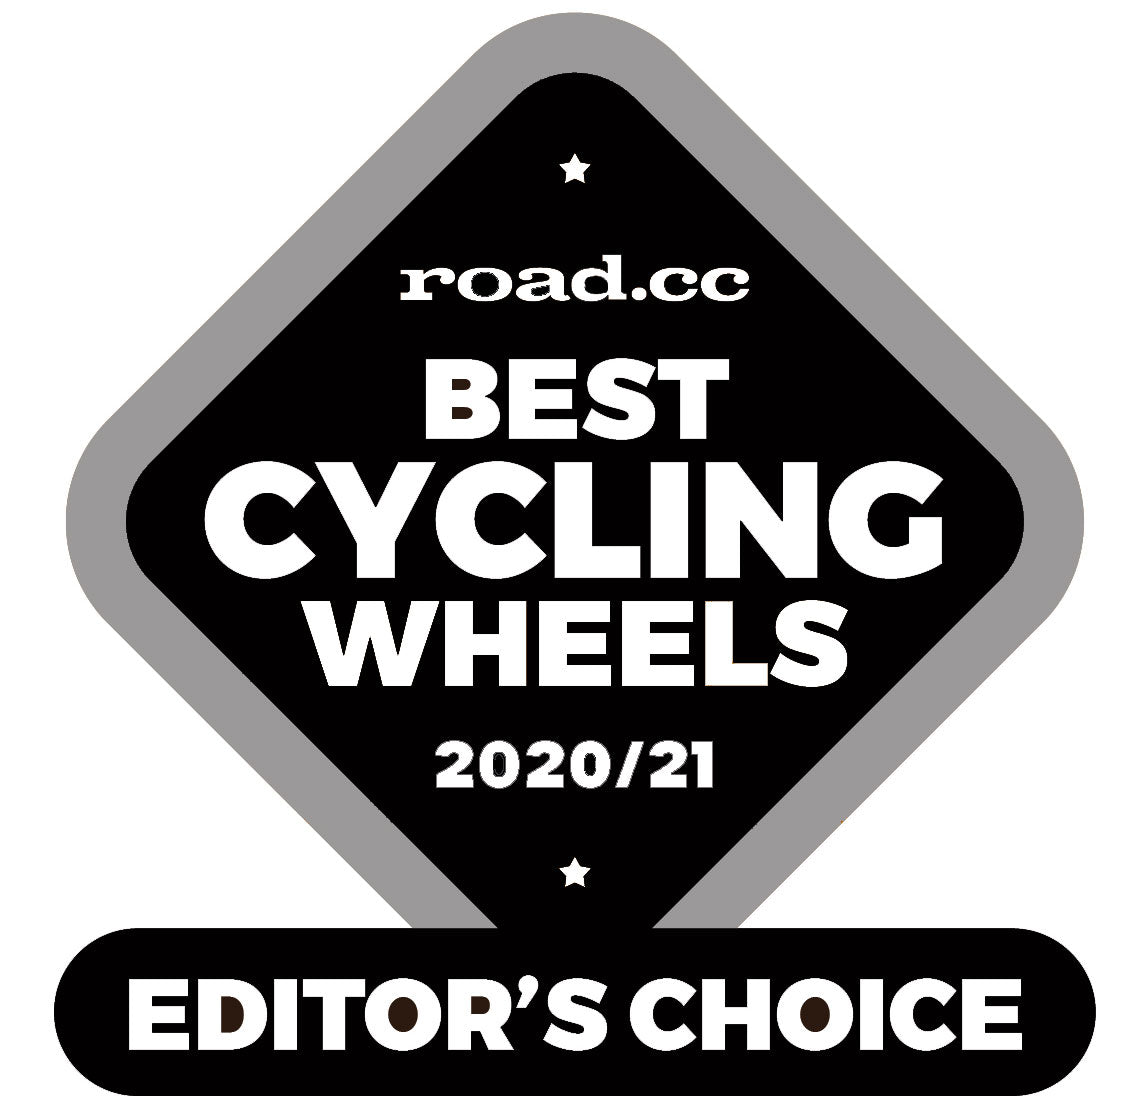 Roadcc Editors Choice Logo